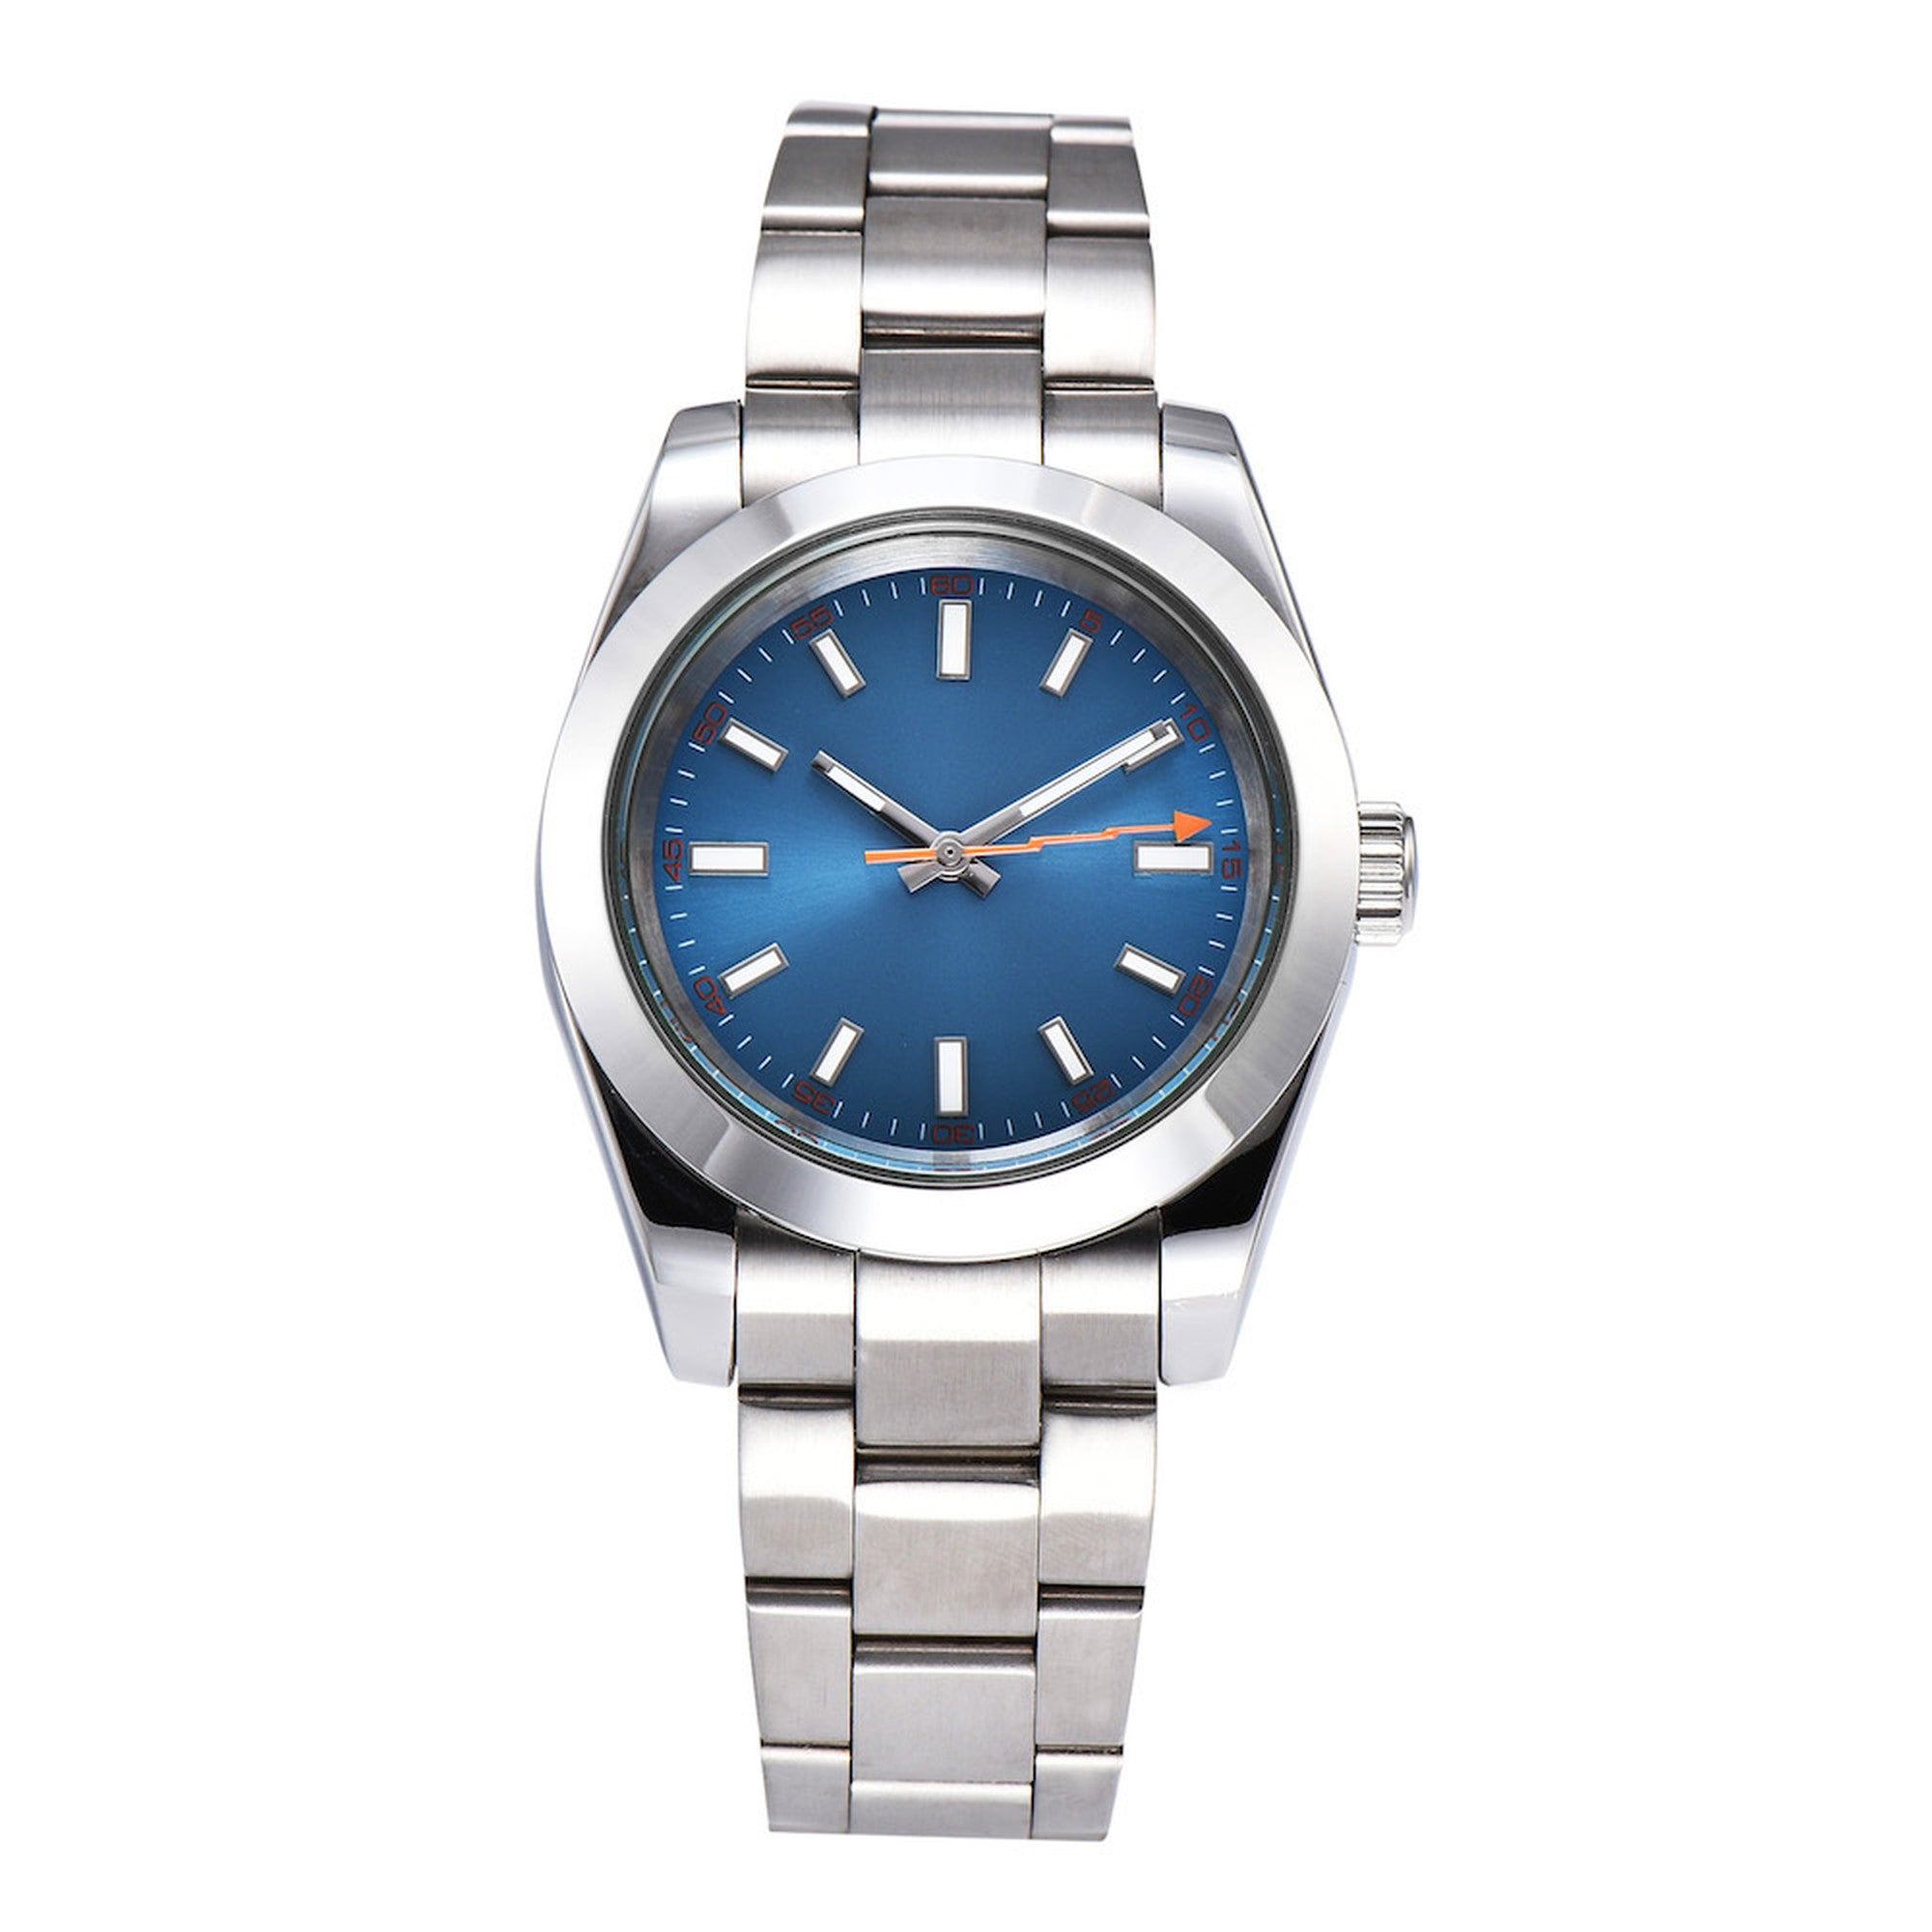 PARNIS Men's self-winding watch / high quality movement / Milgauss blue / popular luxury brand / waterproof